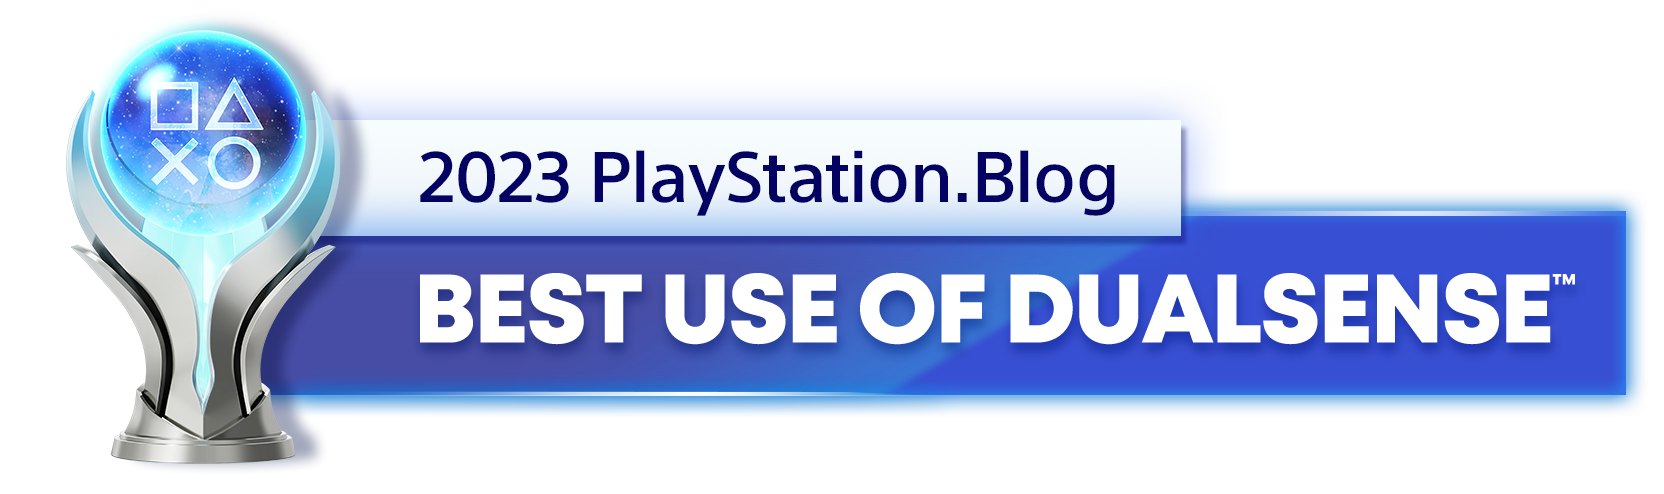  "Platinum Trophy for the 2023 PlayStation Blog Best Use of DualSense Controller Winner"